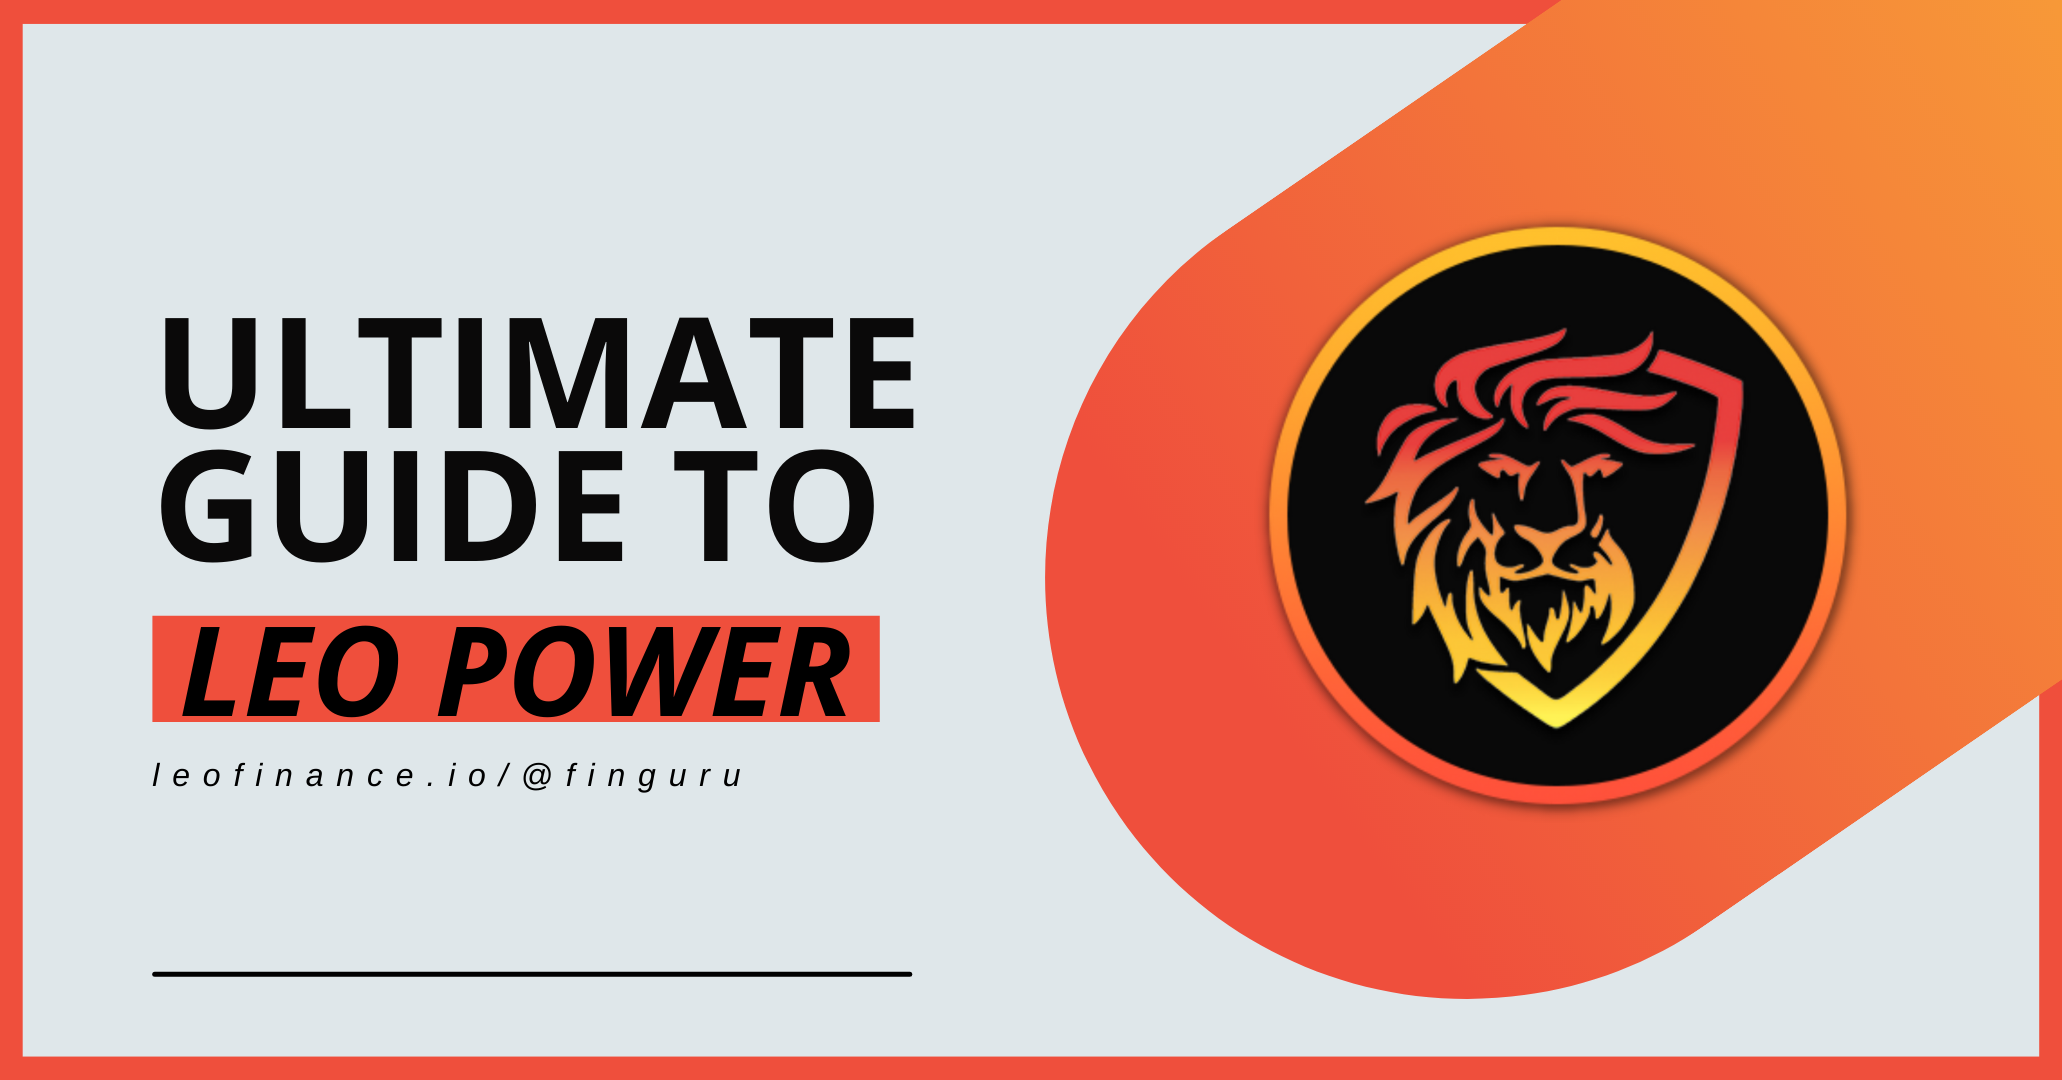 @finguru/ultimate-guide-to-leo-power